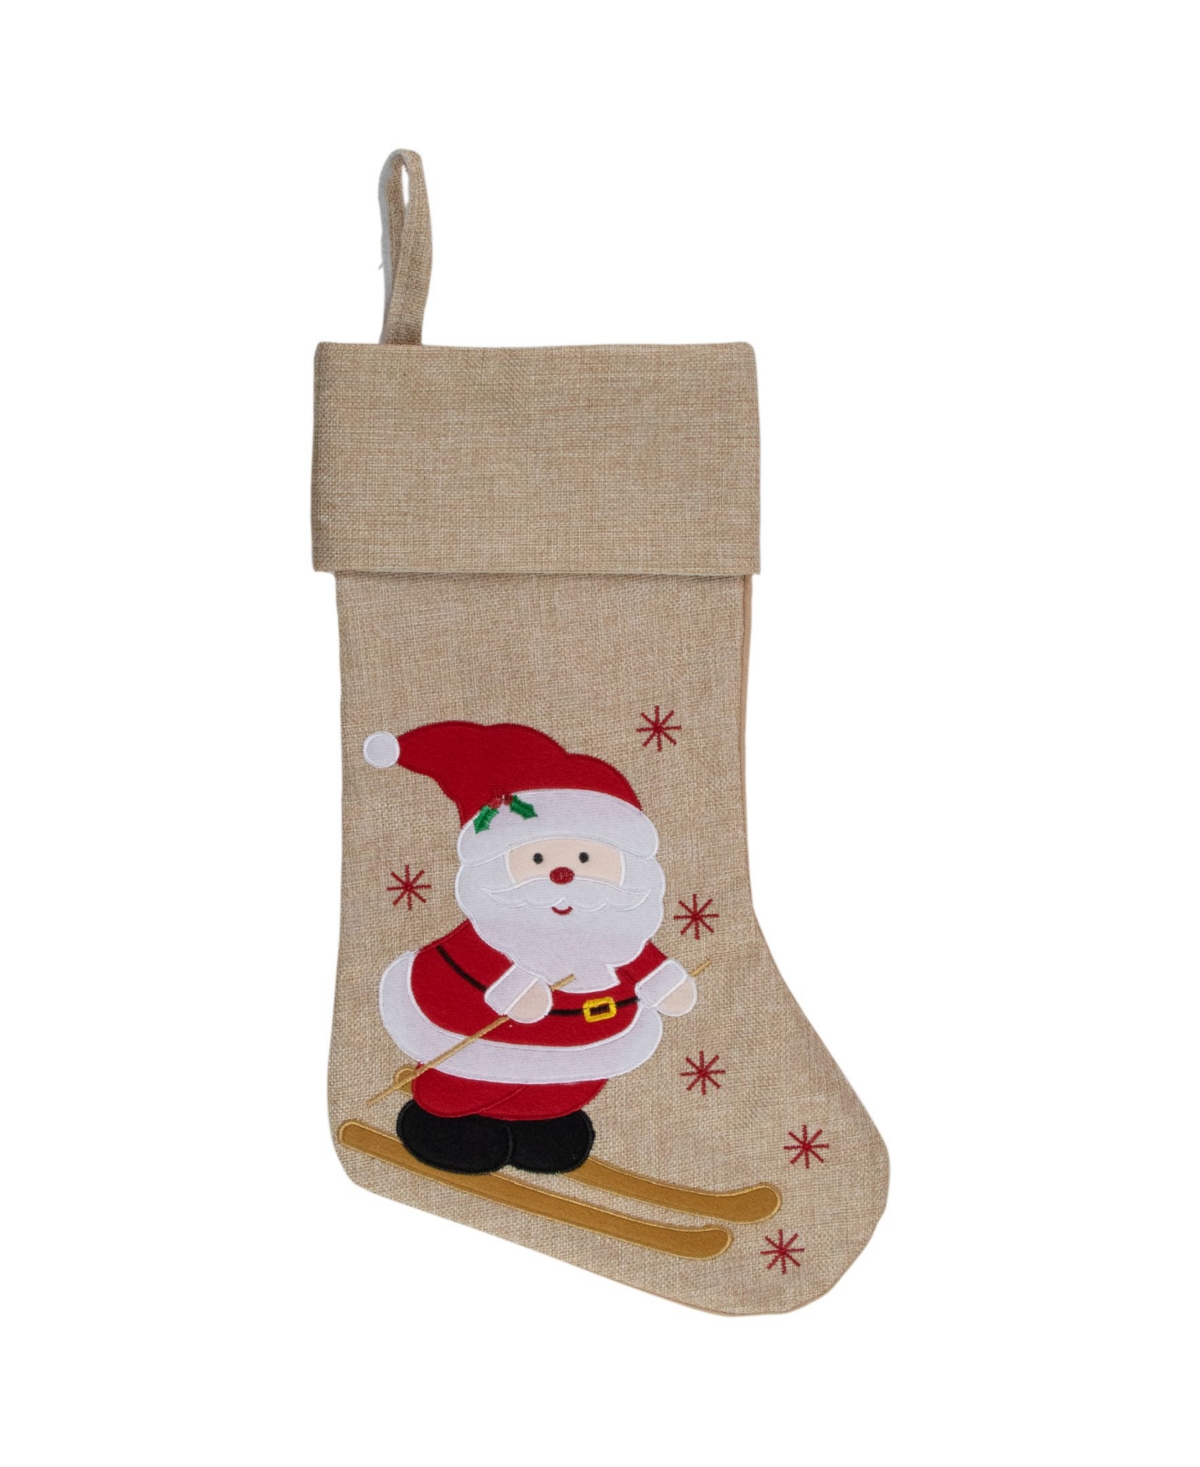 19" Burlap Skiing Santa with Poles and Snowflakes Christmas Stocking - Beige